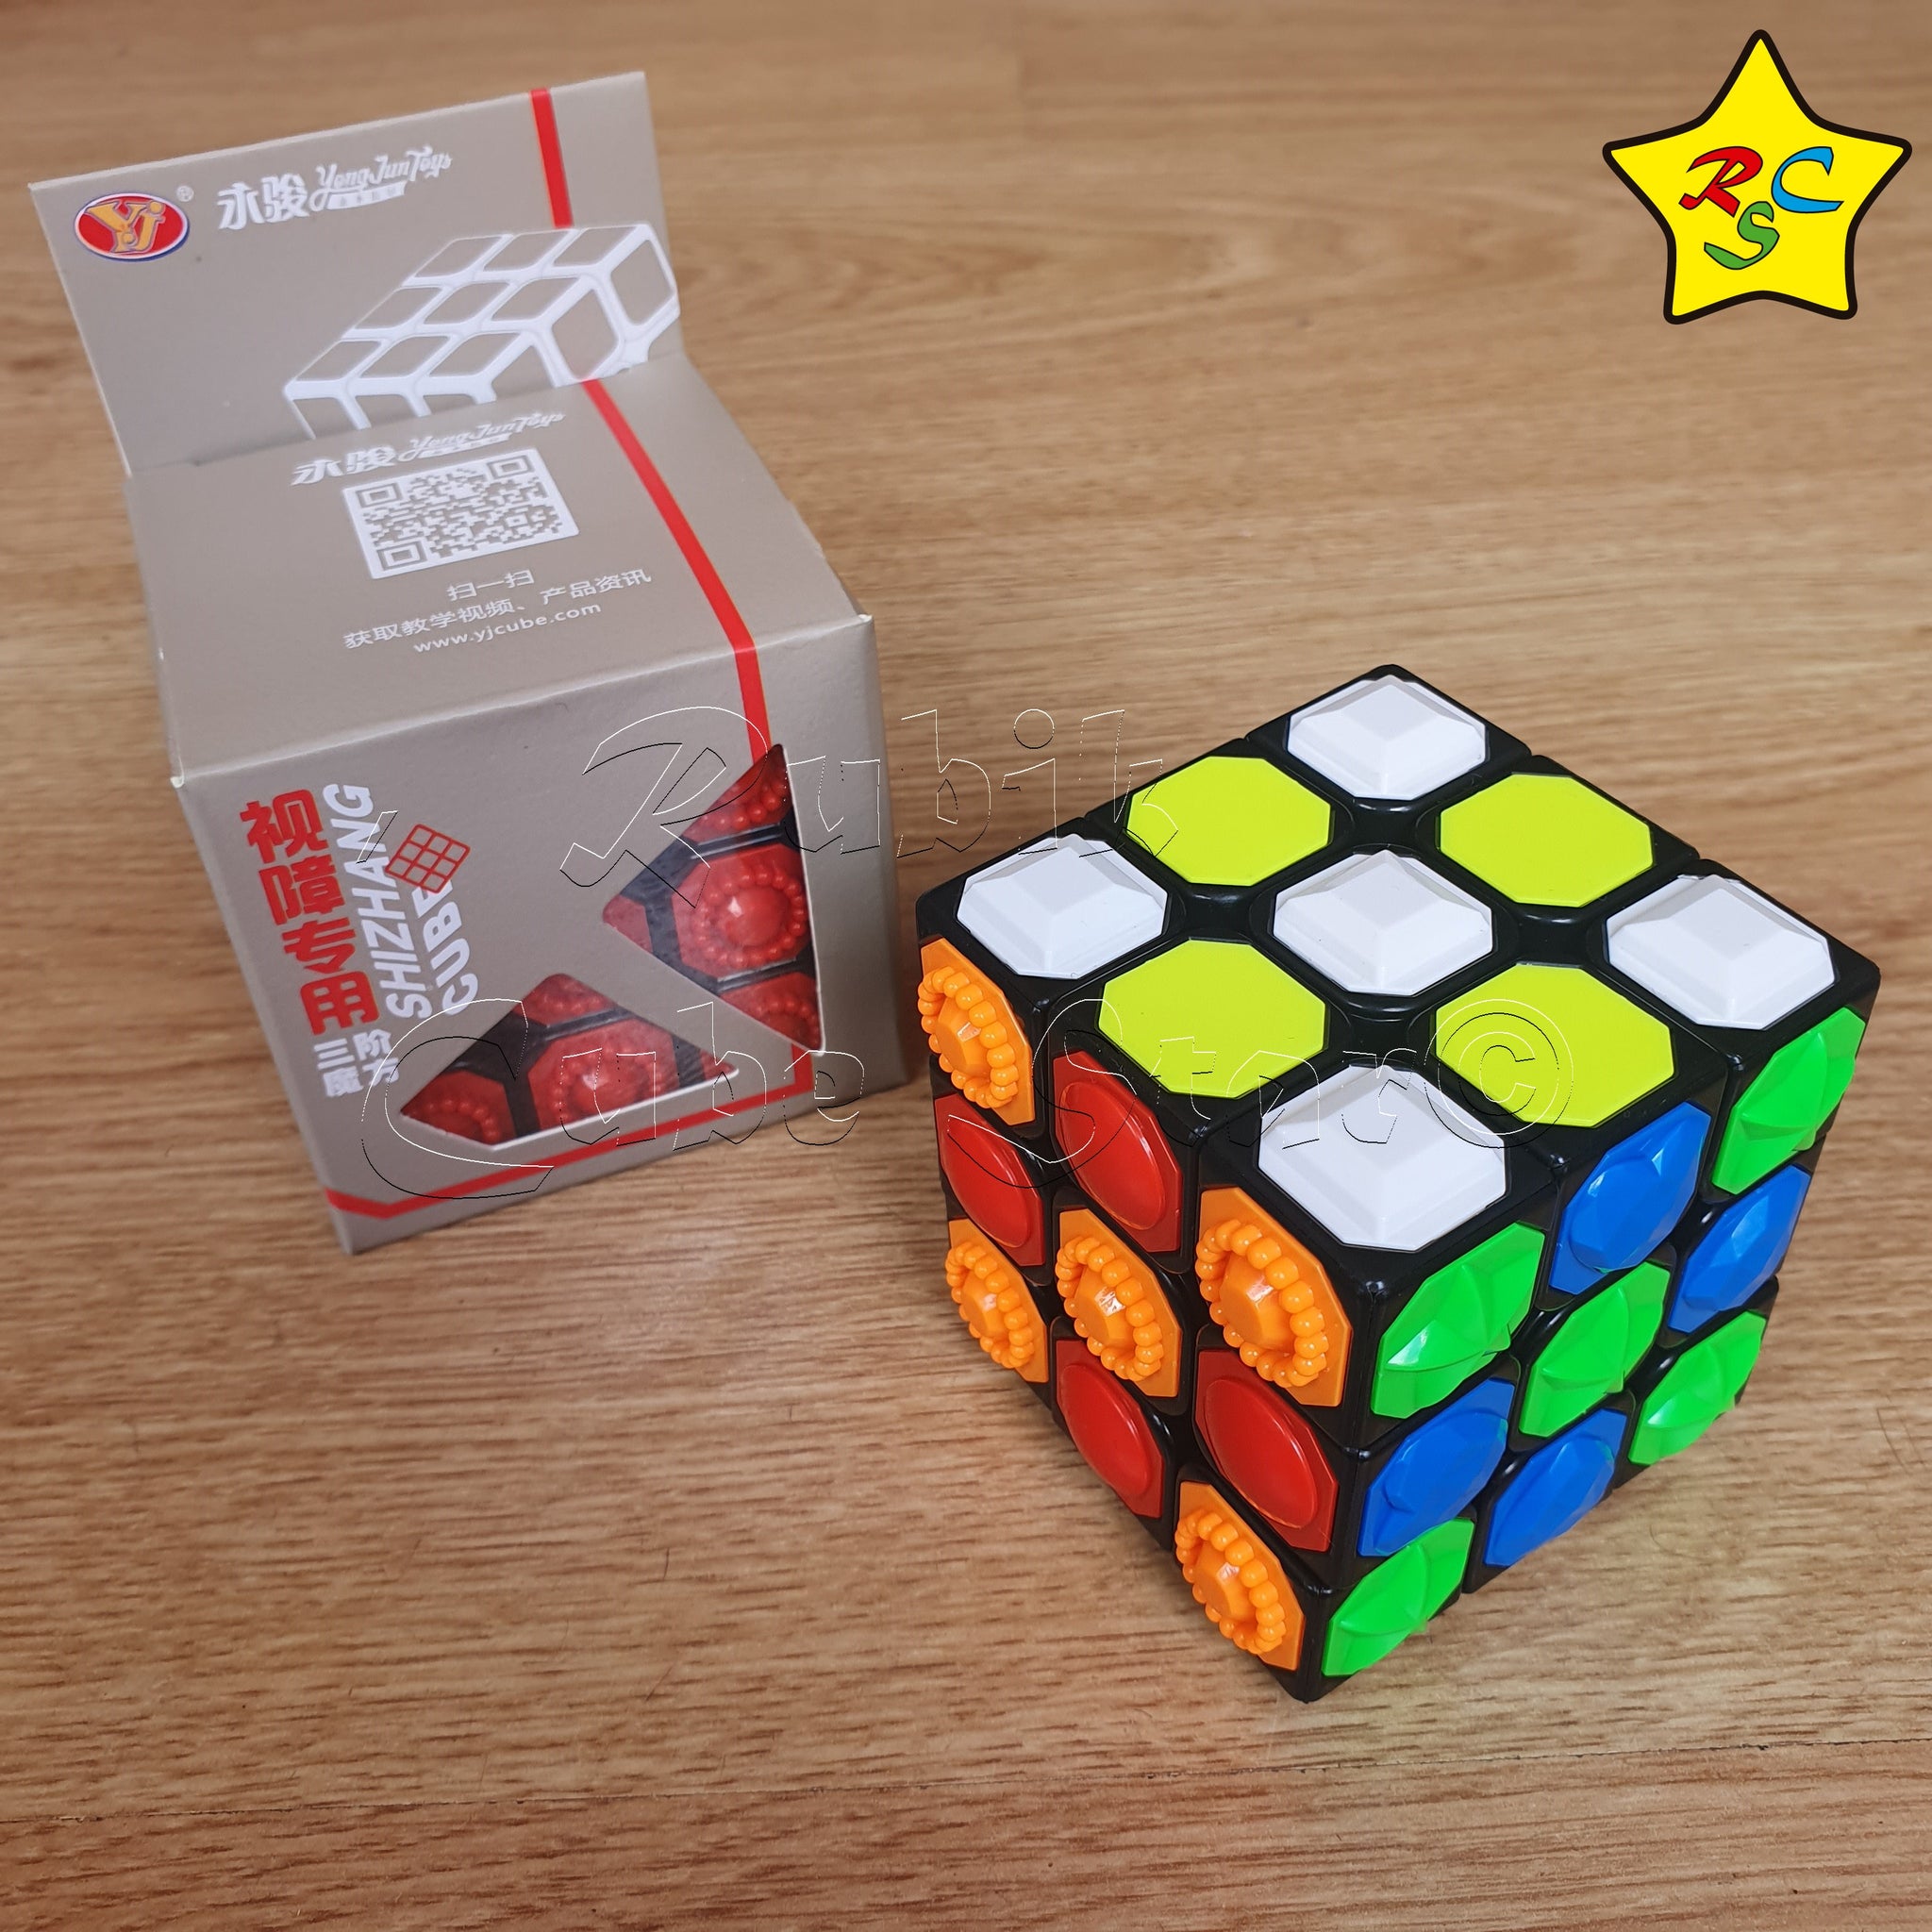 Tipos De Cubos De Rubik Cubo Rubik 3x3 Blind Yj Textura Formas Tacto Reto A Ciegas – Rubik Cube Star